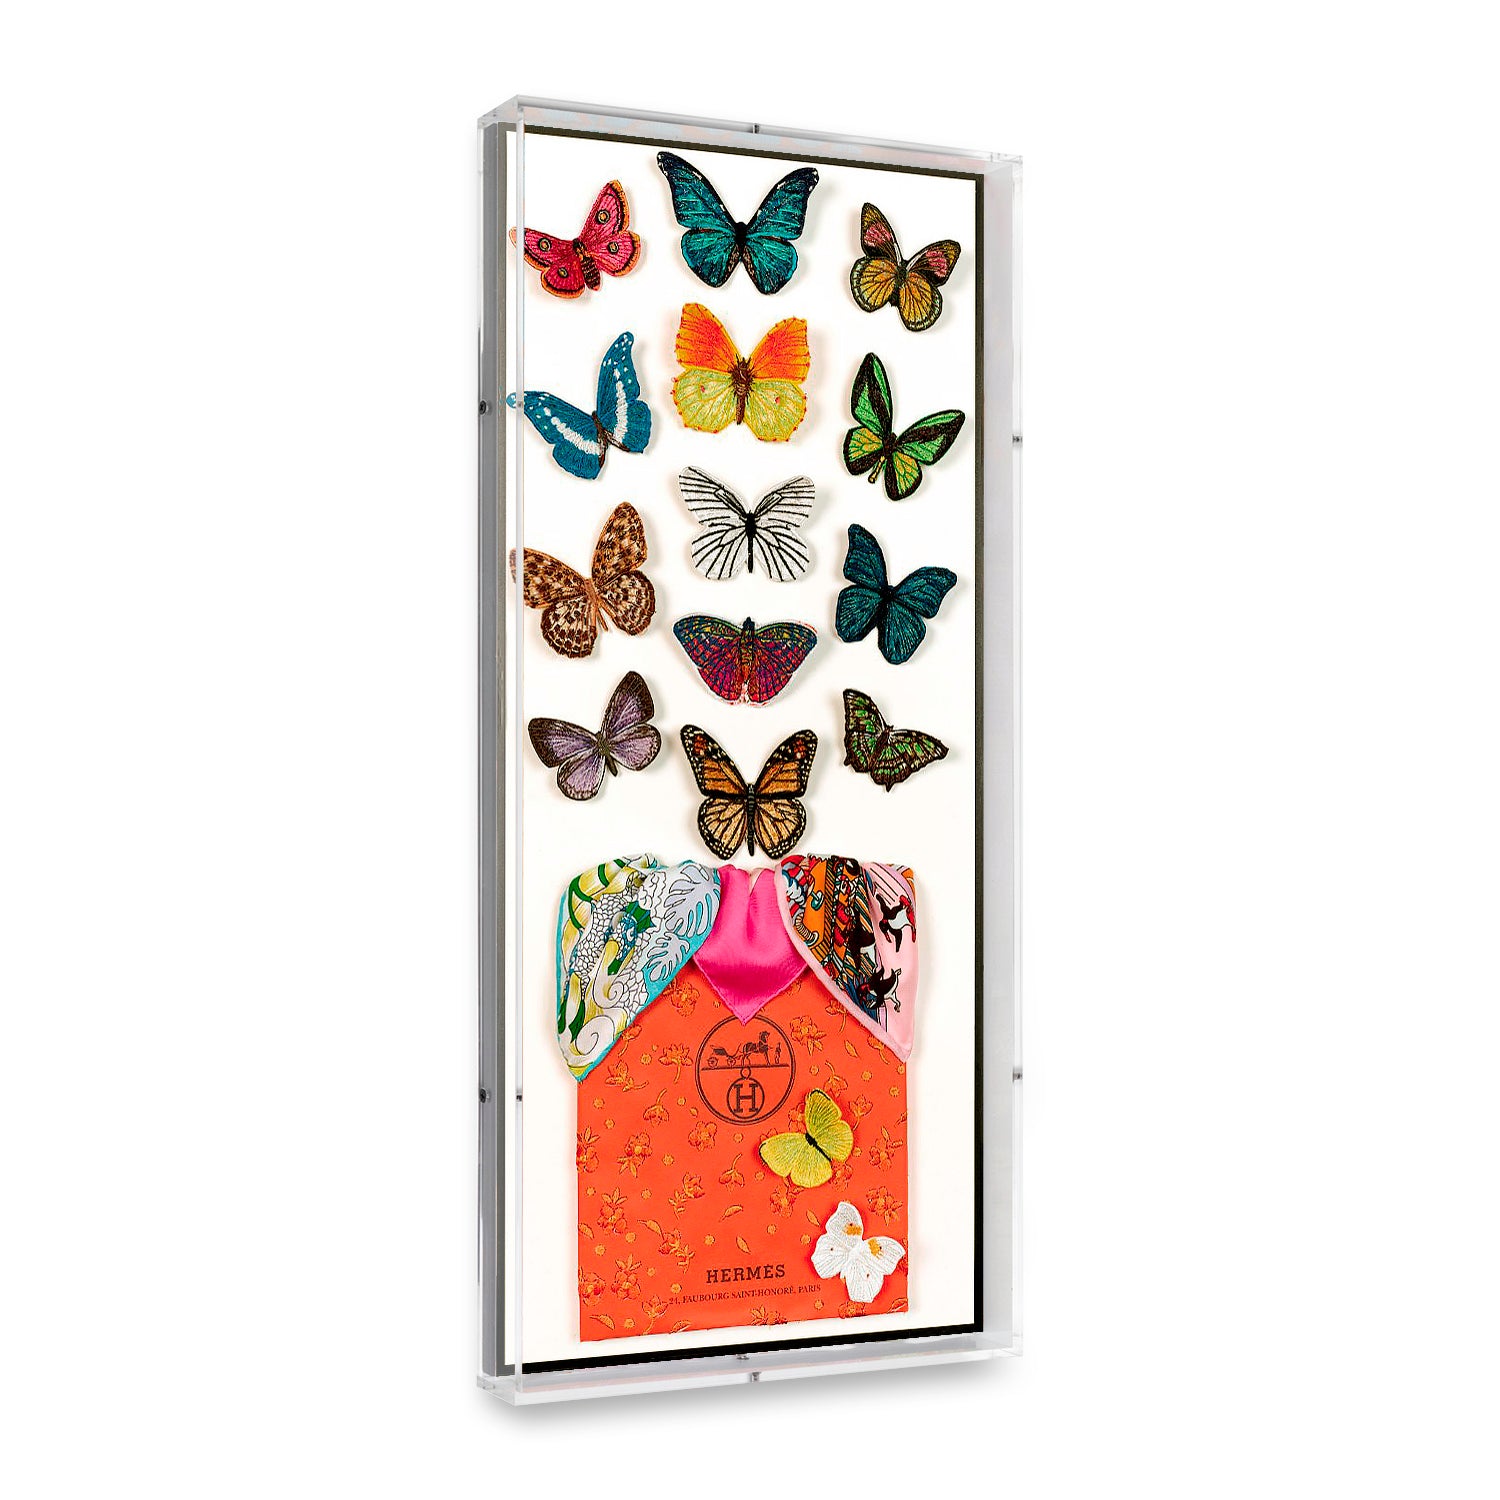 Hermès Butterfly Surprise by Stephen Wilson (12x26x2